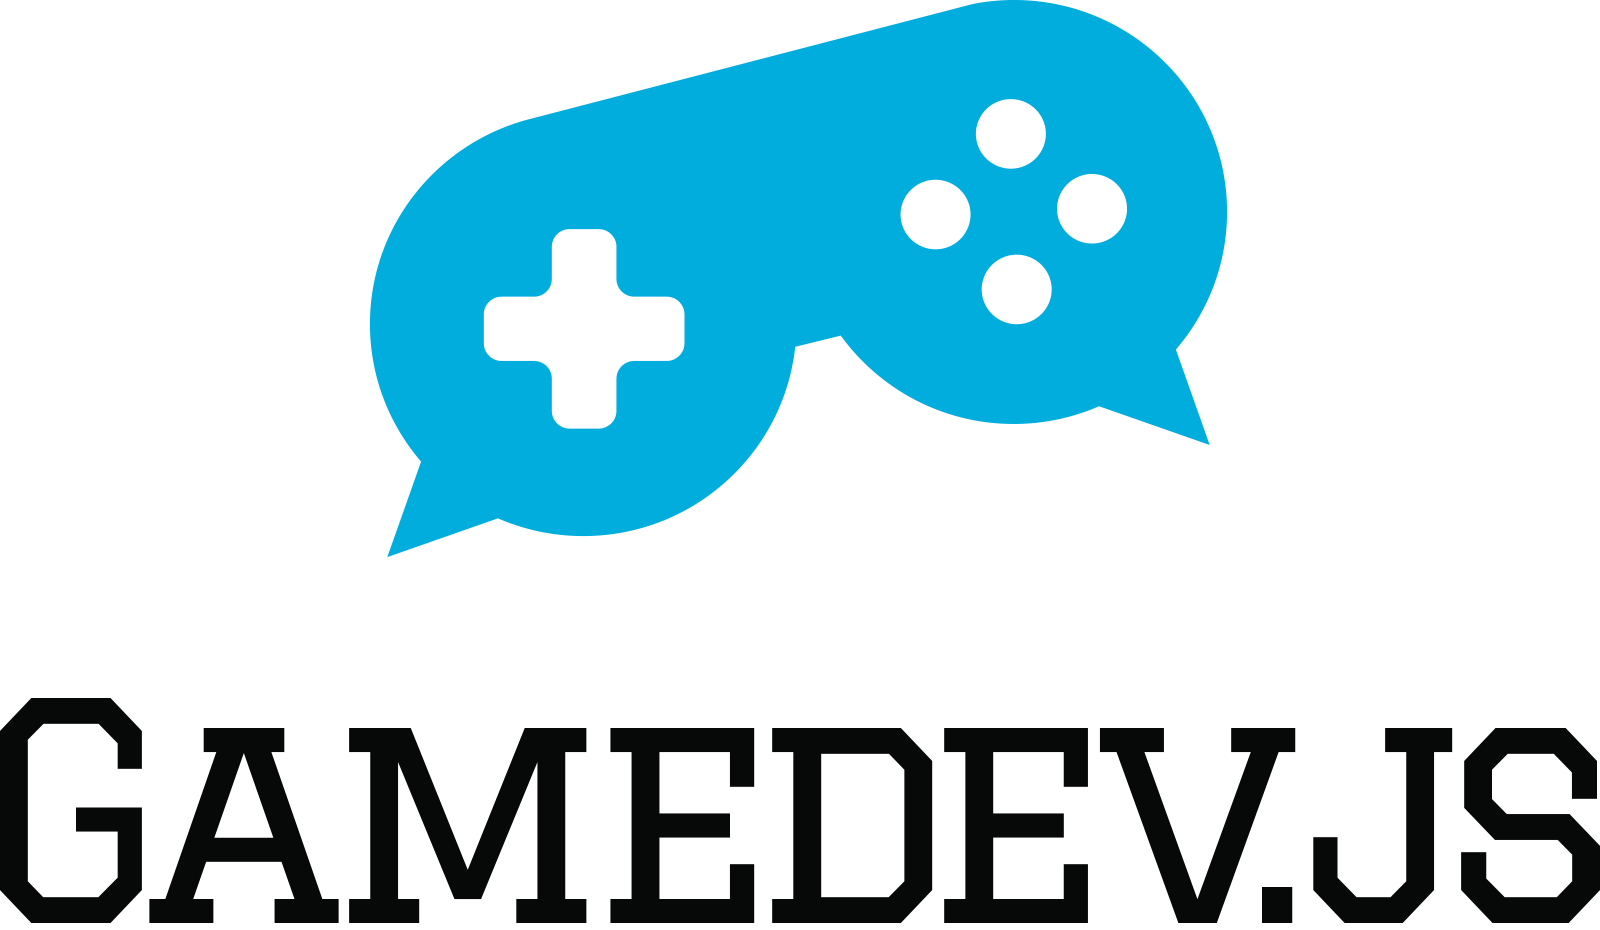 Gamedev.js